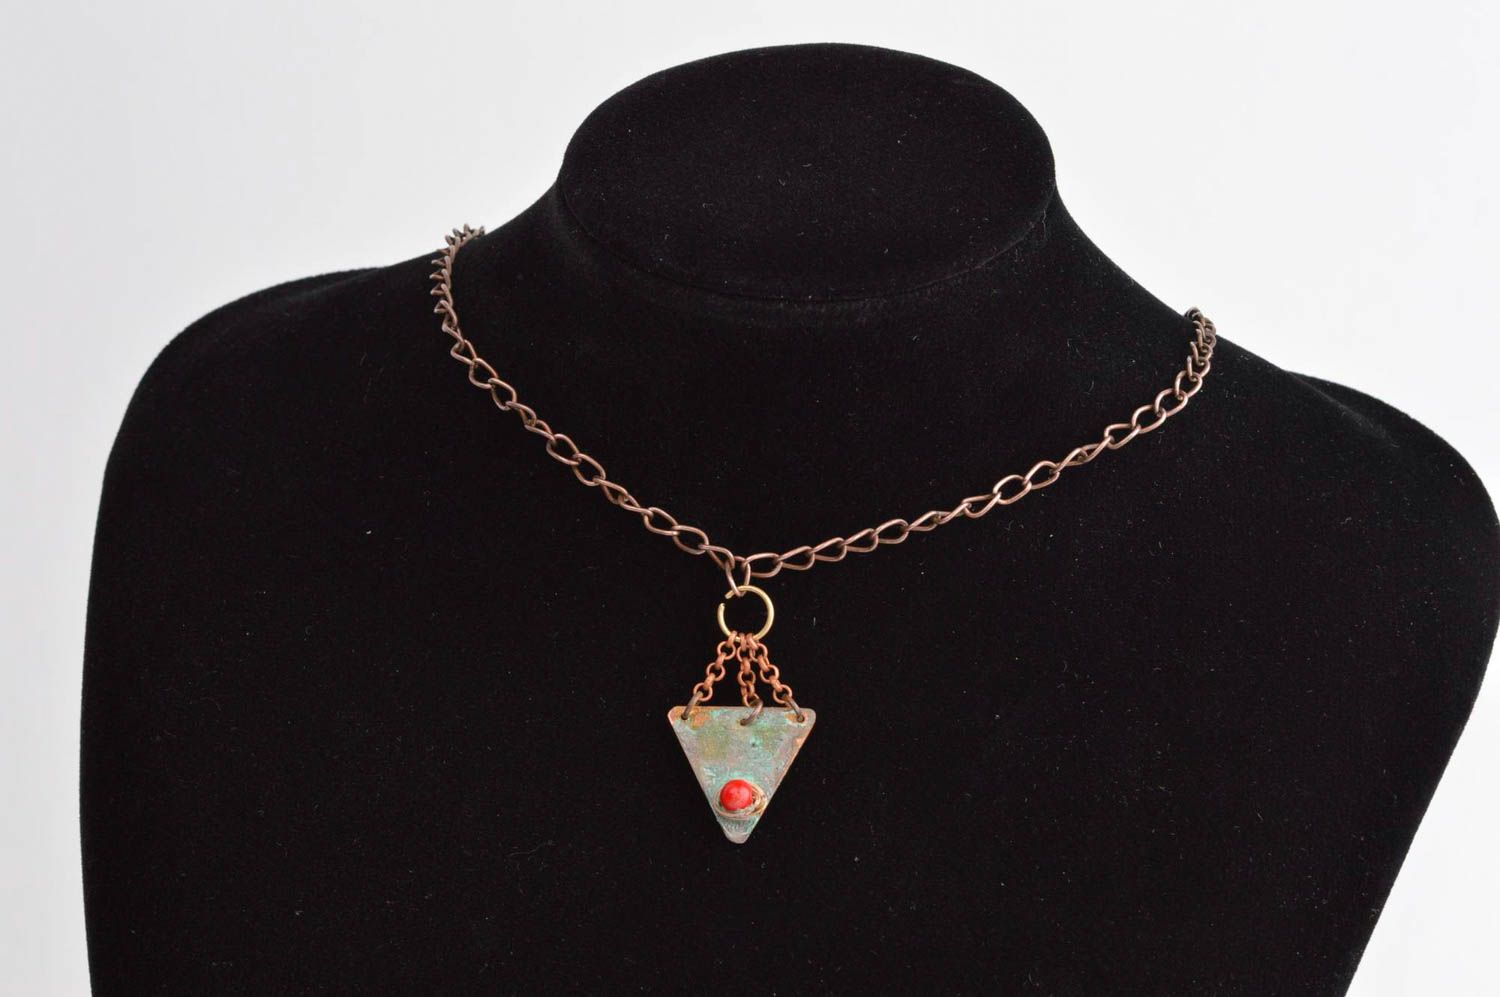 Handmade pendant designer accessory neck pendant copper jewelry gift ideas photo 1